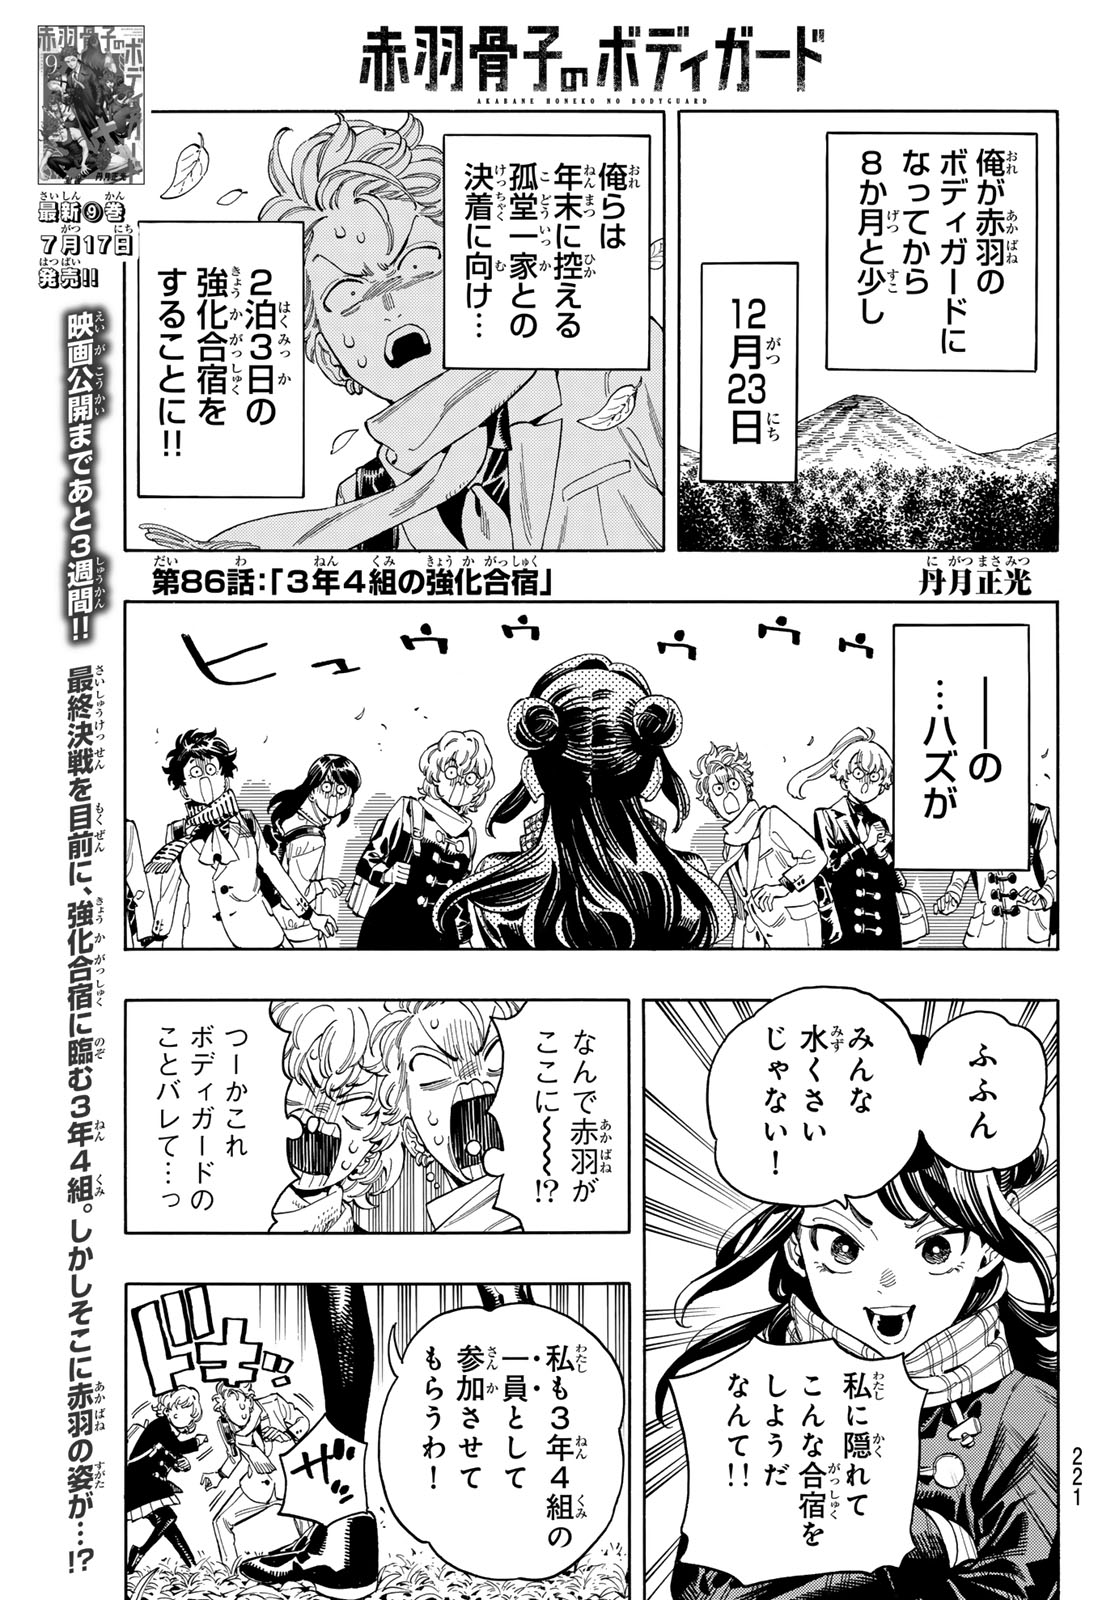 Akabane Honeko no Bodyguard - Chapter 86 - Page 1